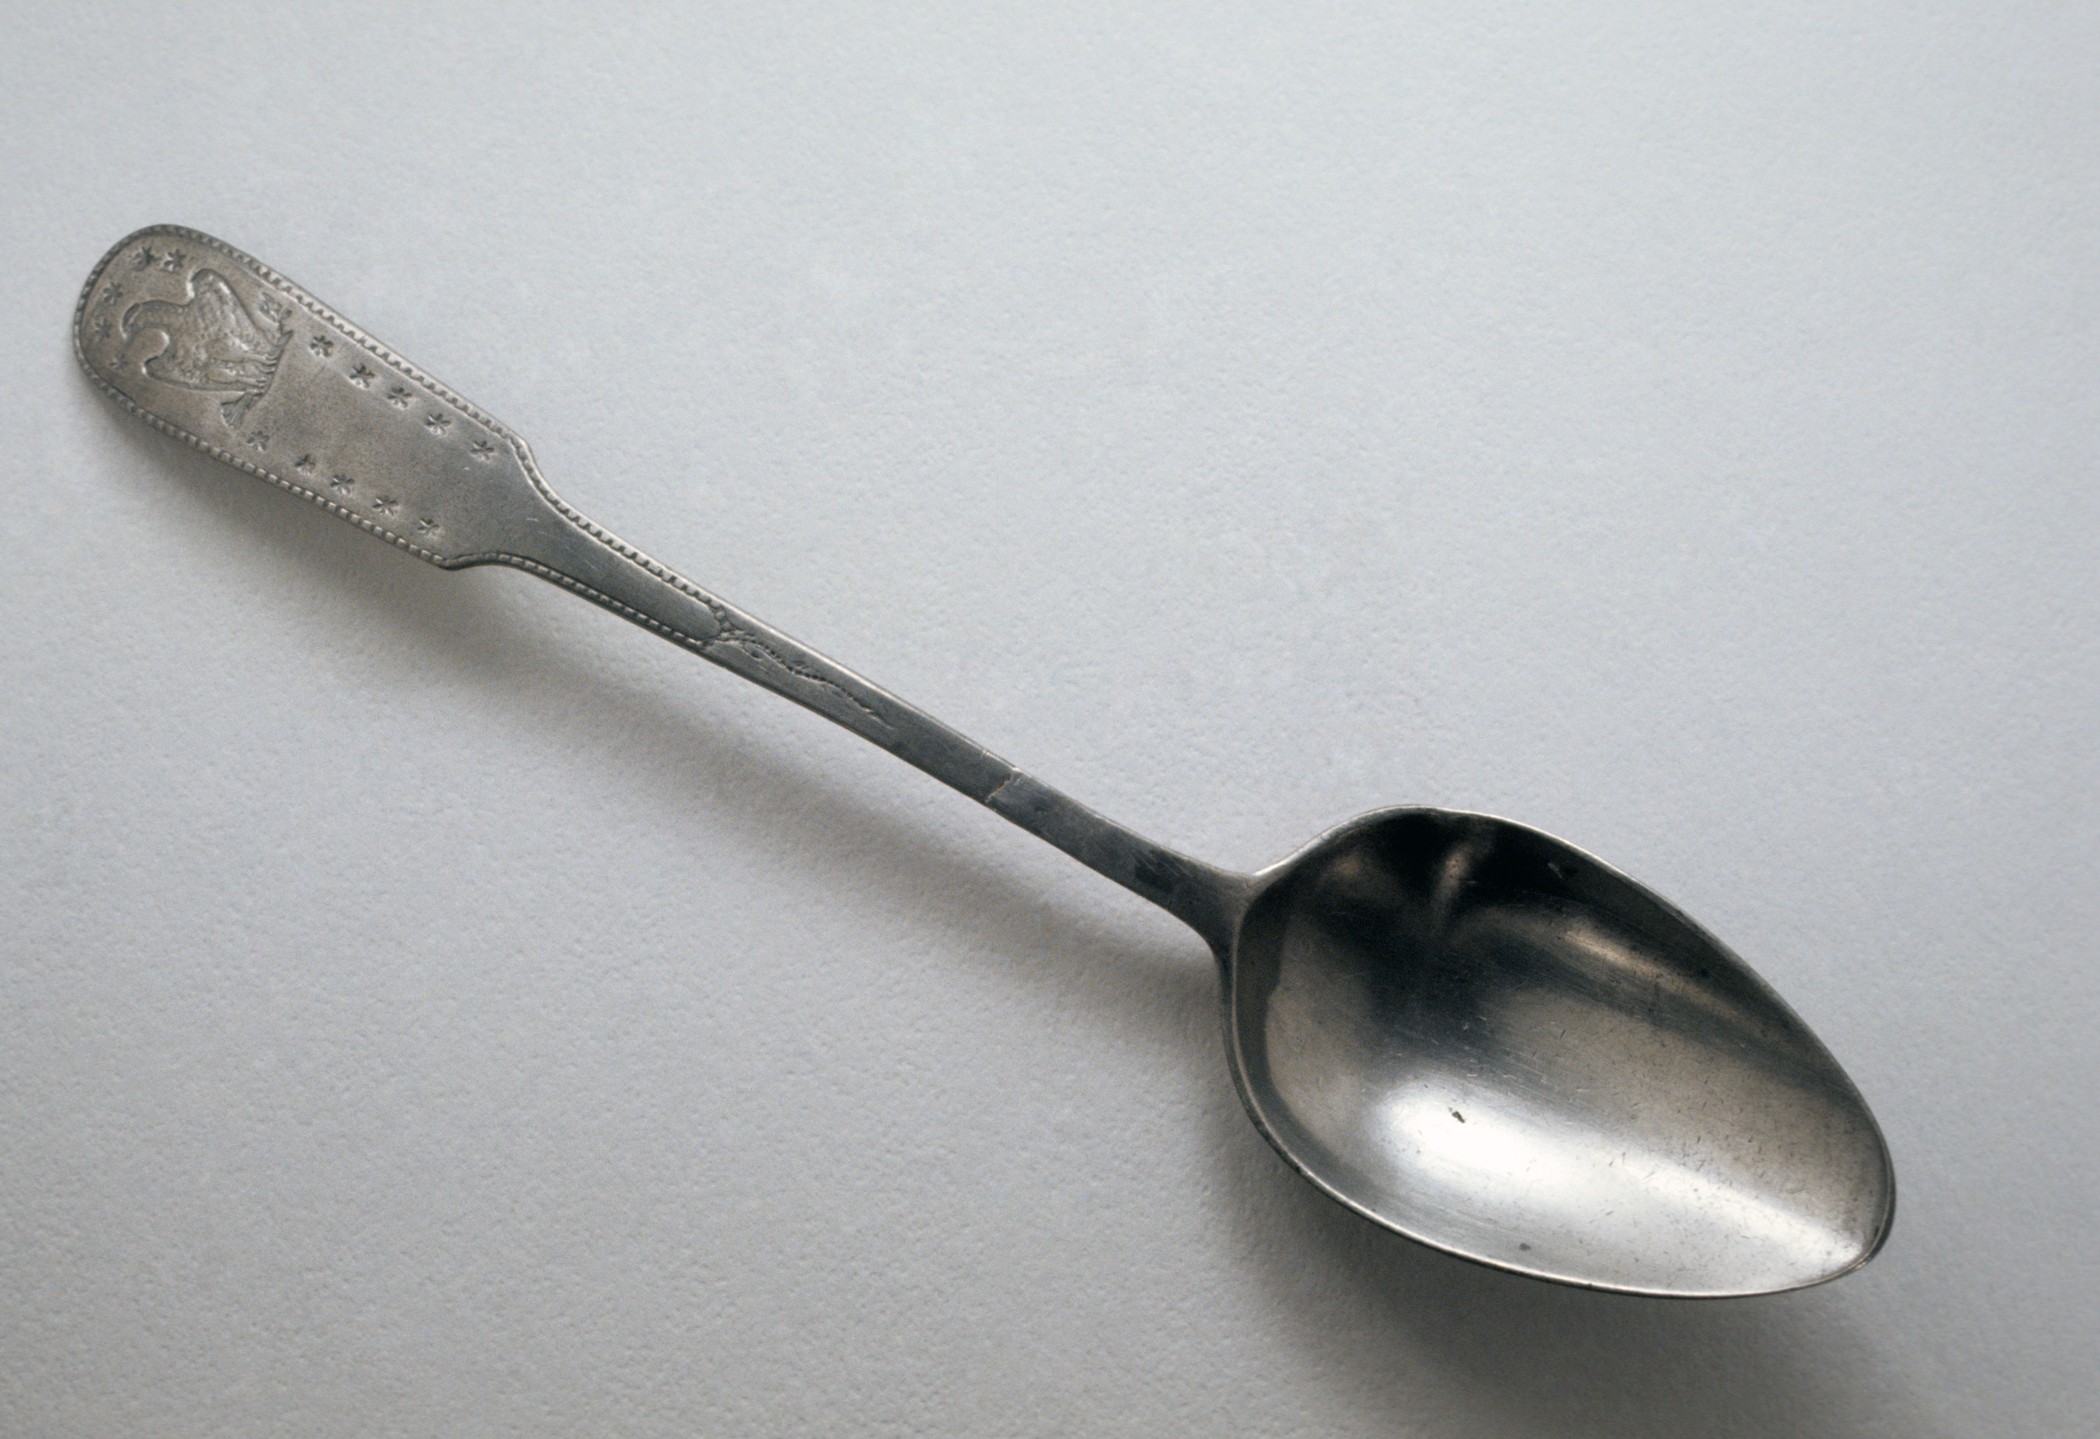 1965.1689.001 Pewter spoon